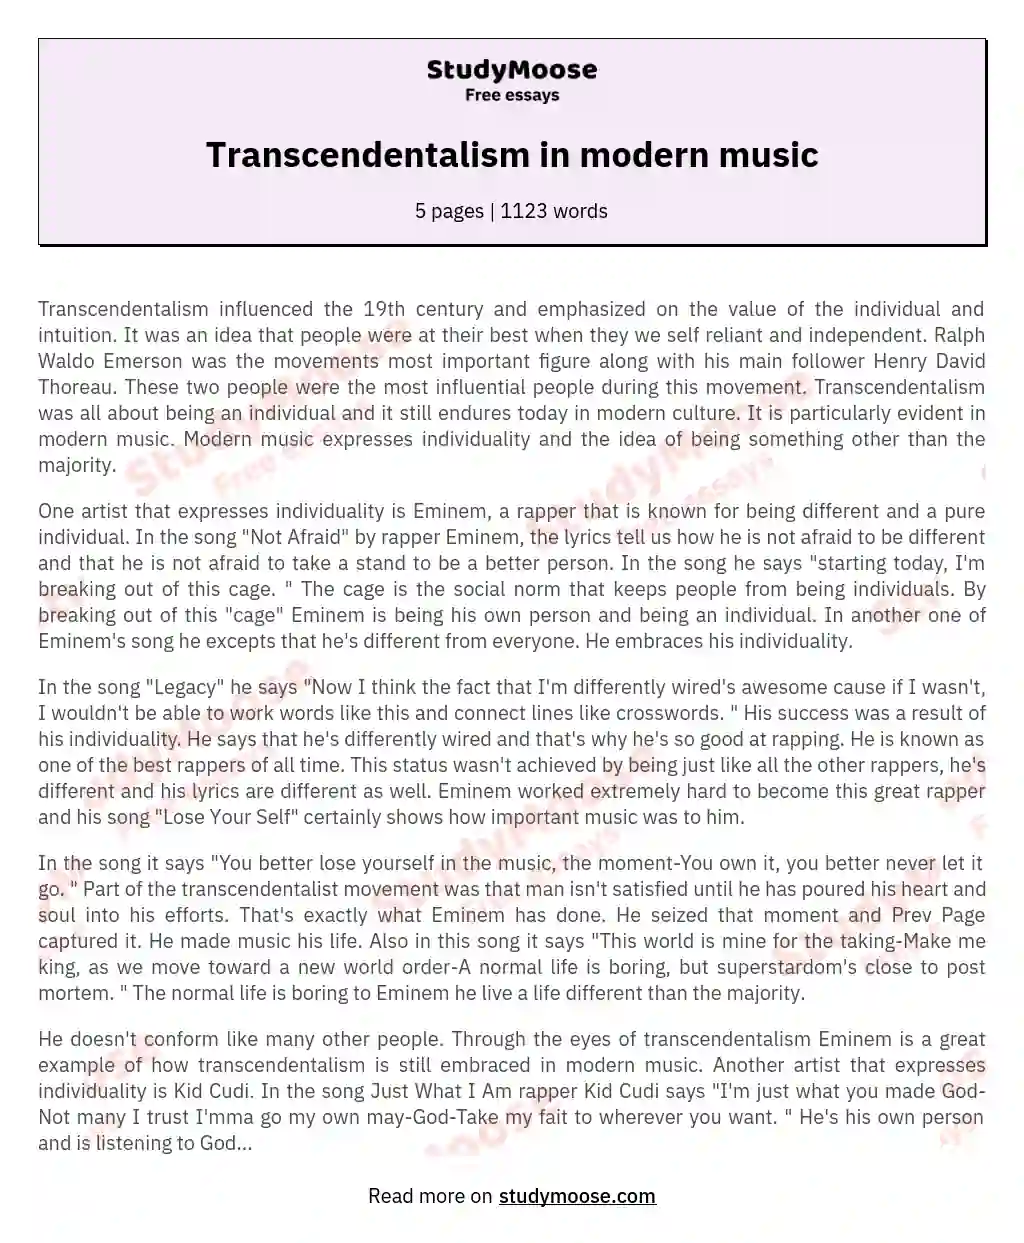 Transcendentalism in modern music essay